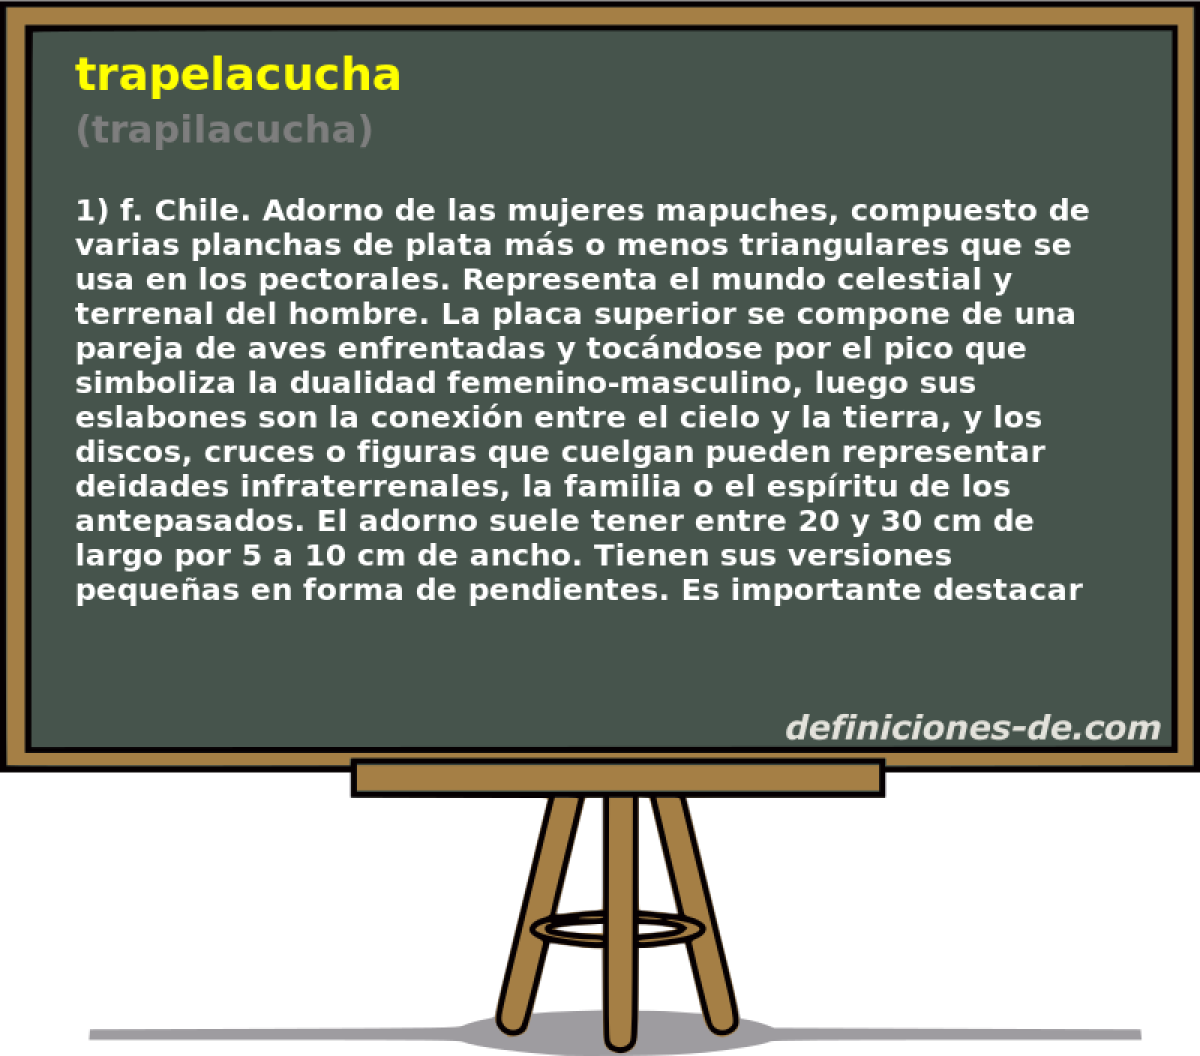 trapelacucha (trapilacucha)